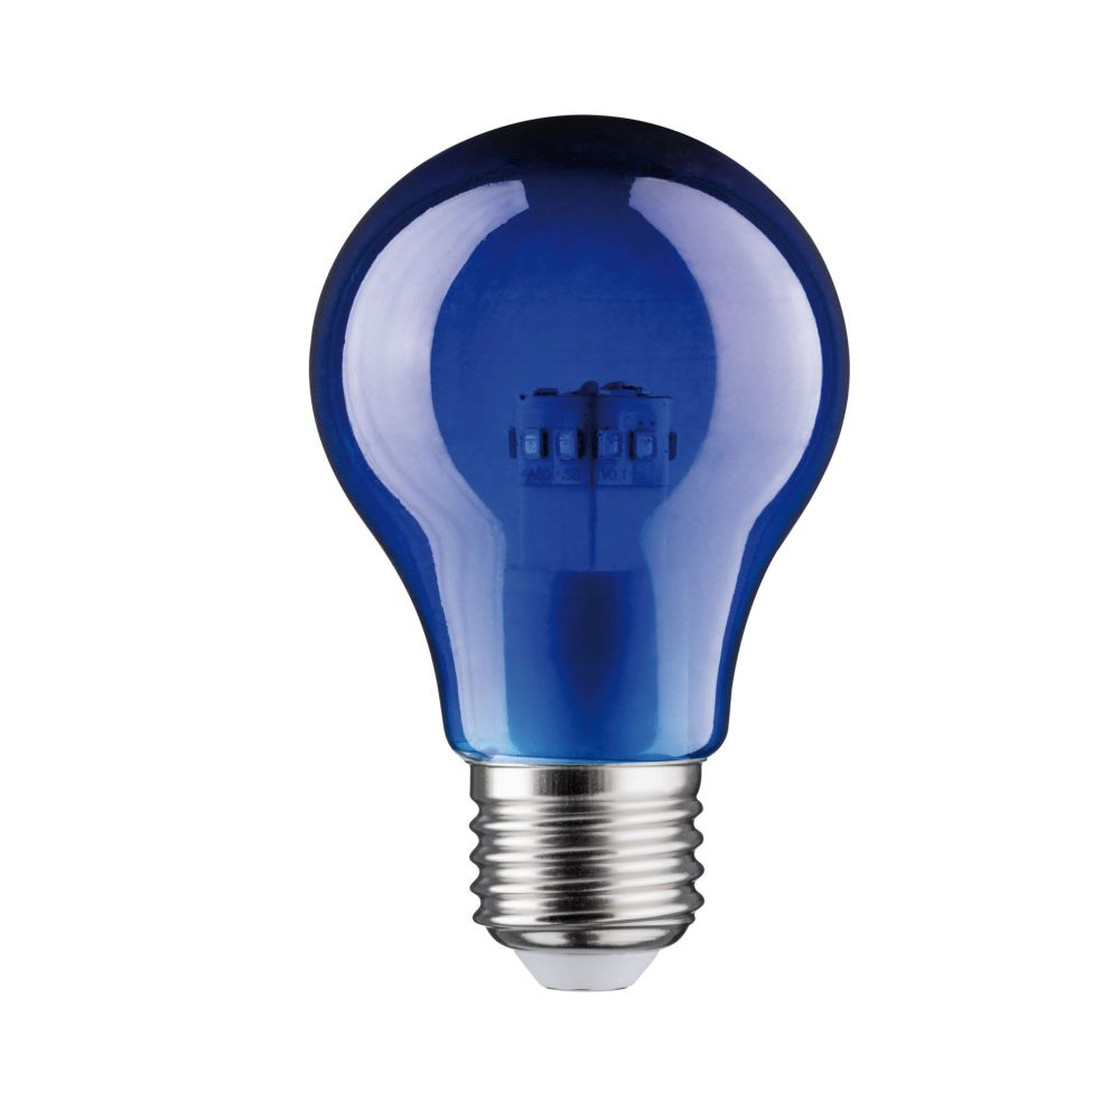 Paulmann 284.50 LED AGL Leuchtmittel 1 W Blau E27 Deko Lampe Birne 23